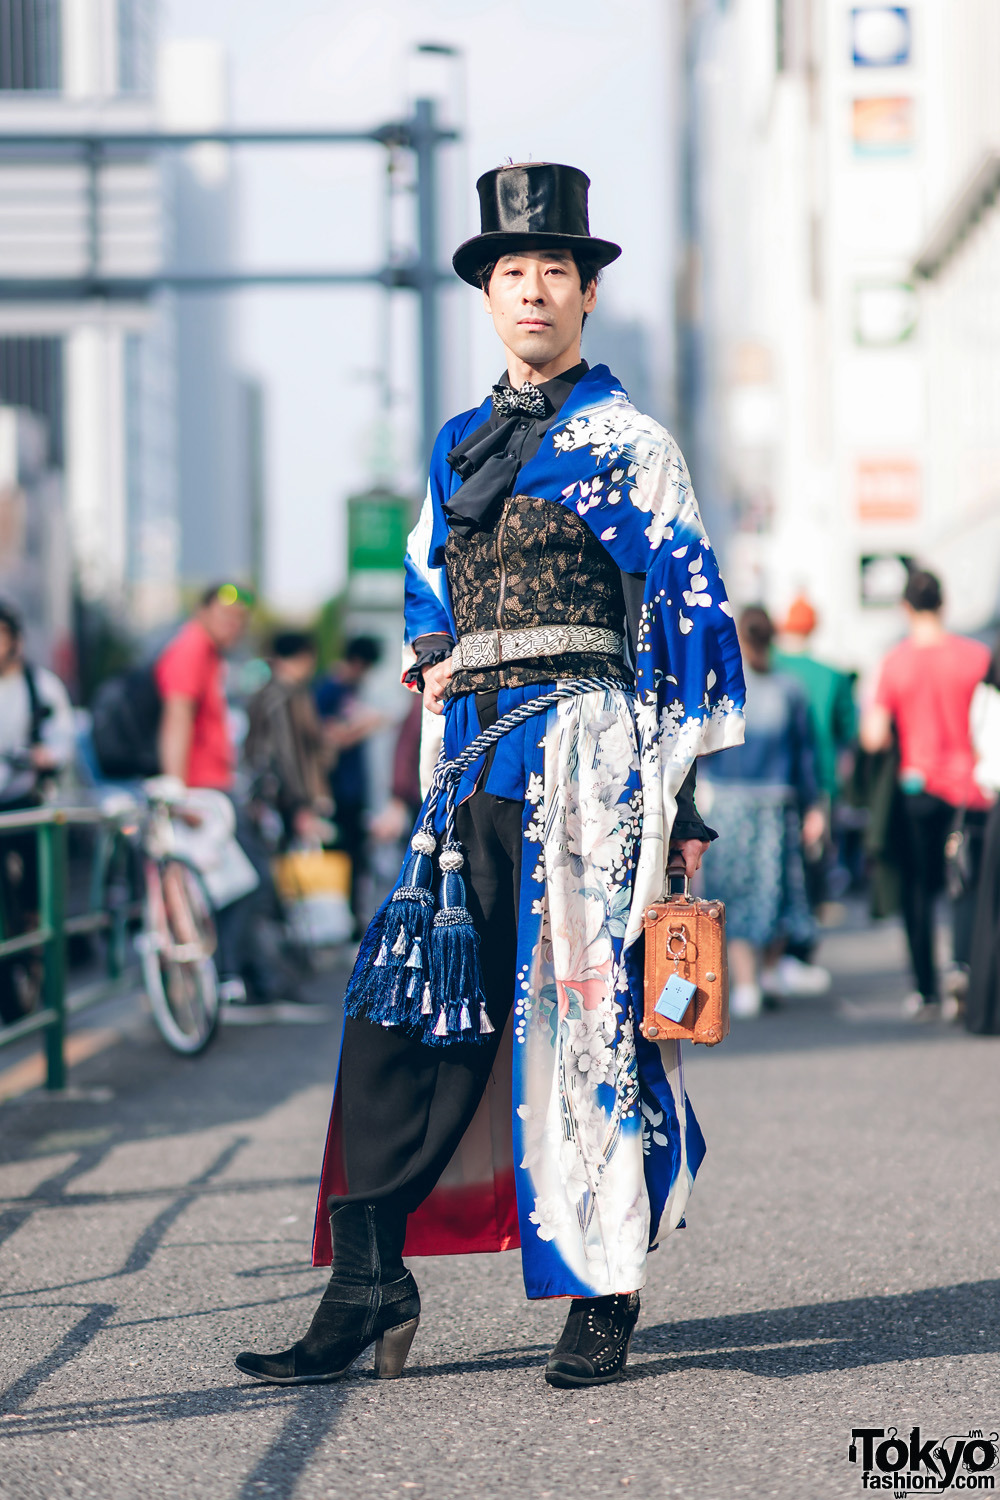 tokyo-fashion:  Karumu on the street in Harajuku wearing a vintage Japanese kimono